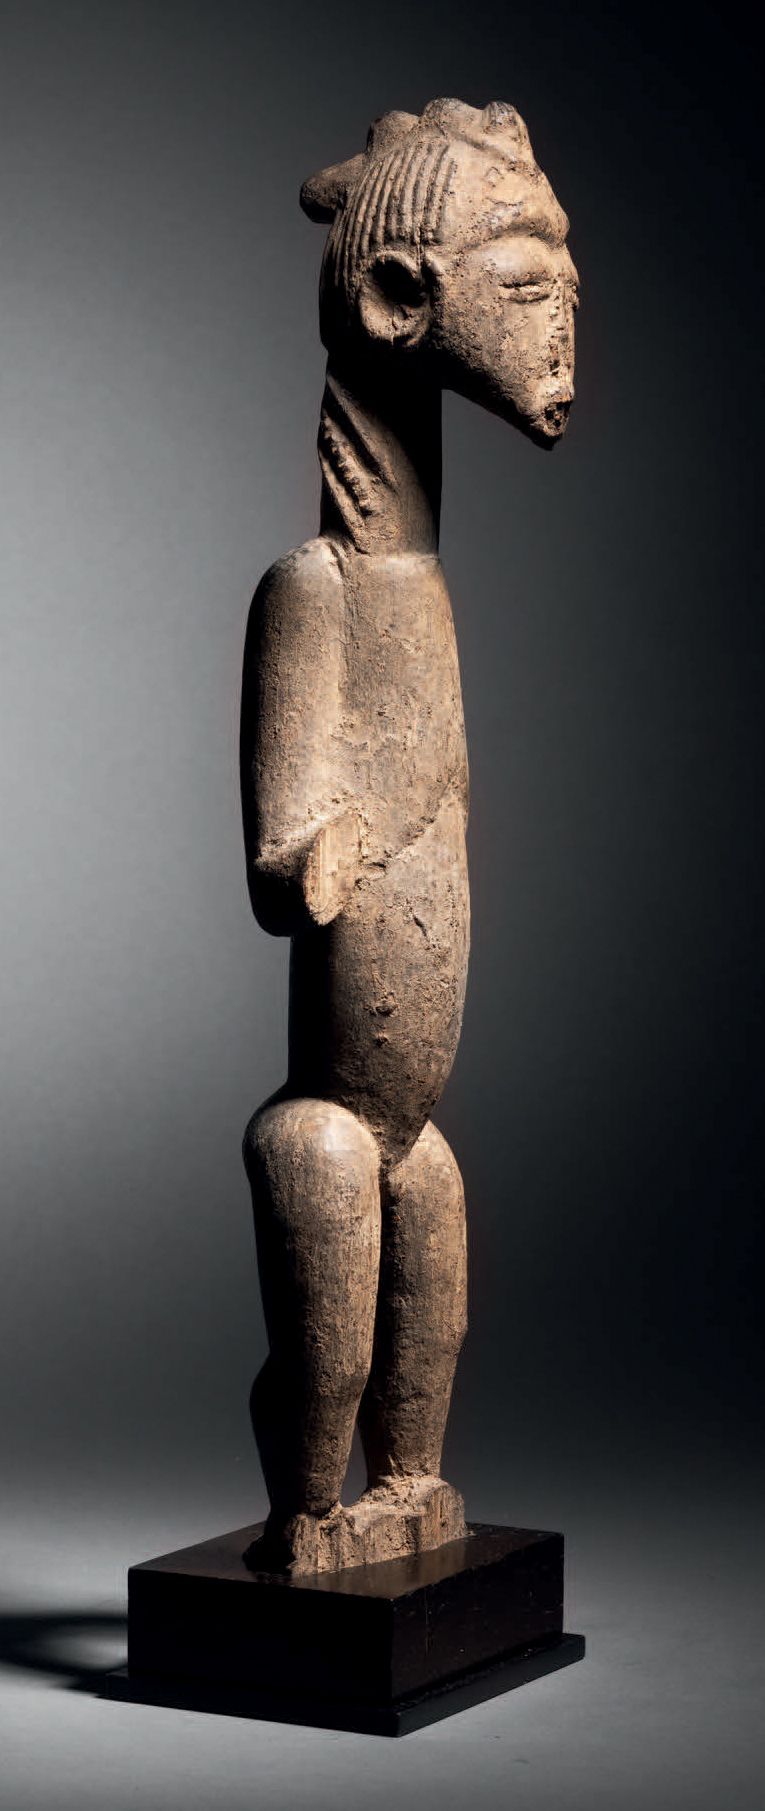 Null Statua, Baule, Costa d'Avorio
Legno con patina grigia crostosa
H. 41,5 cm
F&hellip;